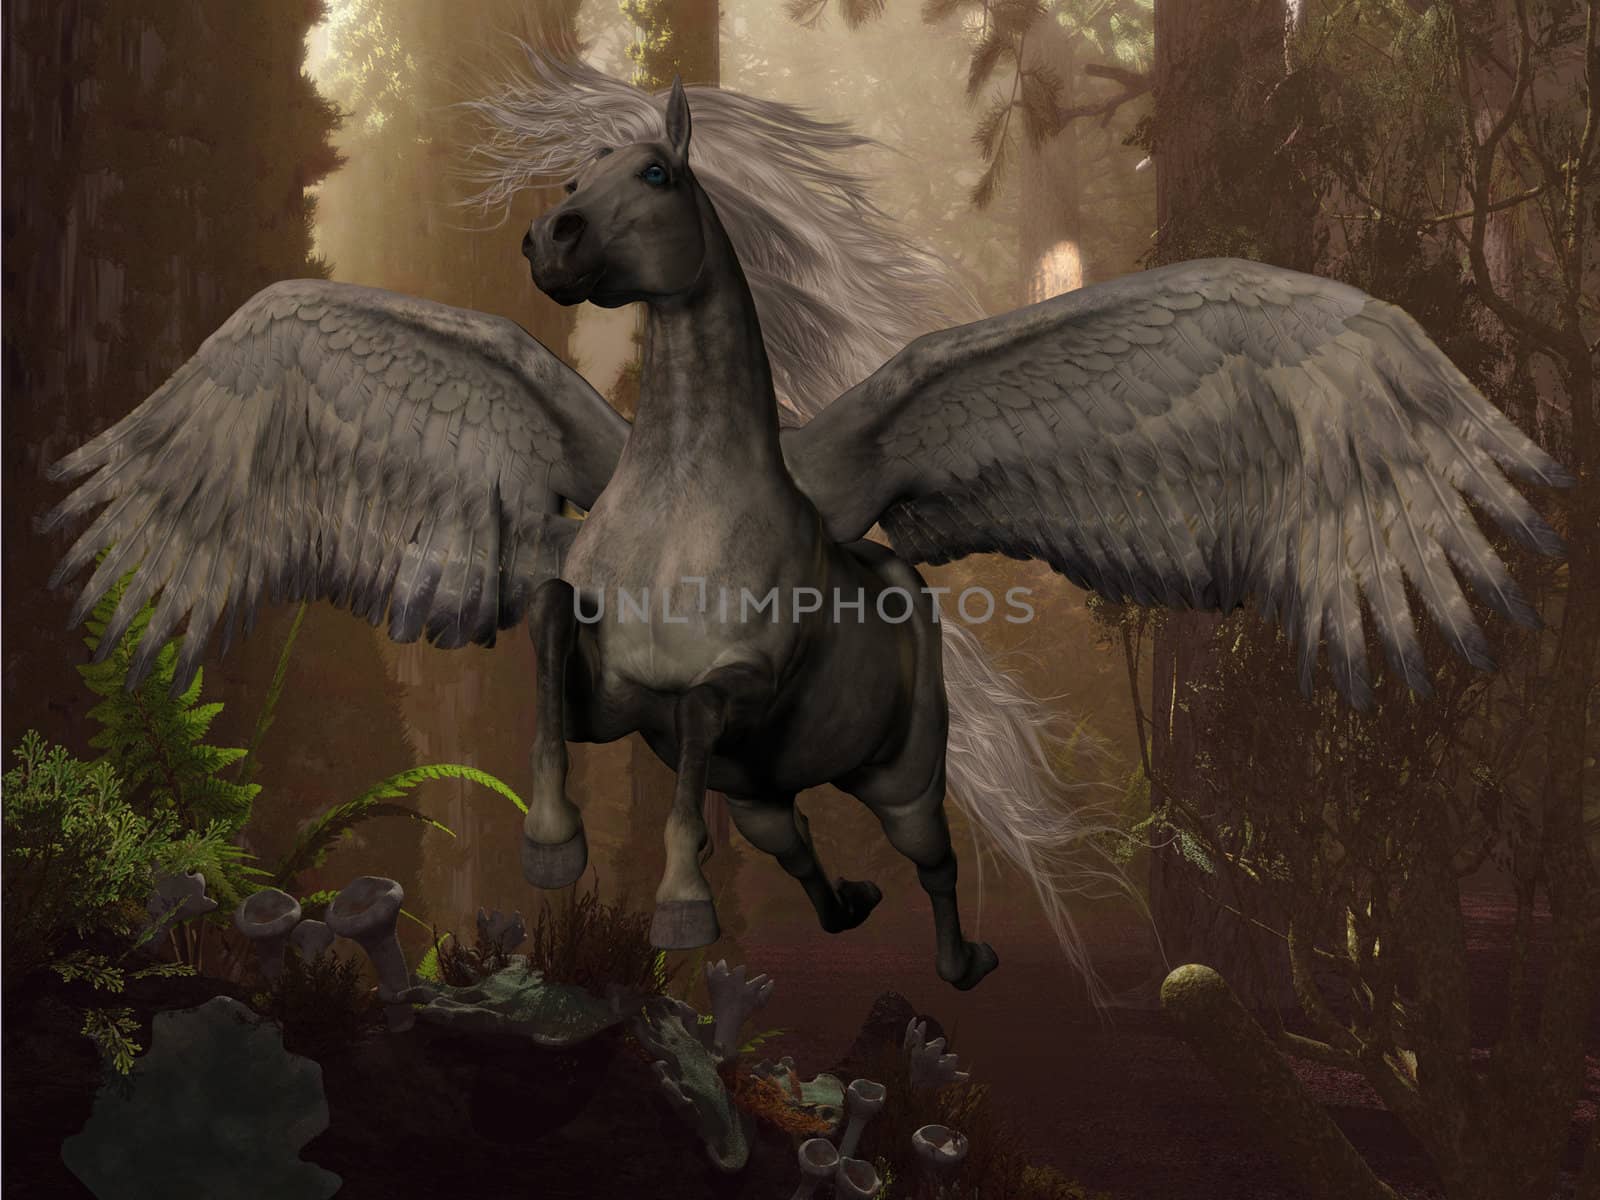 A white Pegasus horse flies up to the sky through a dense forest.